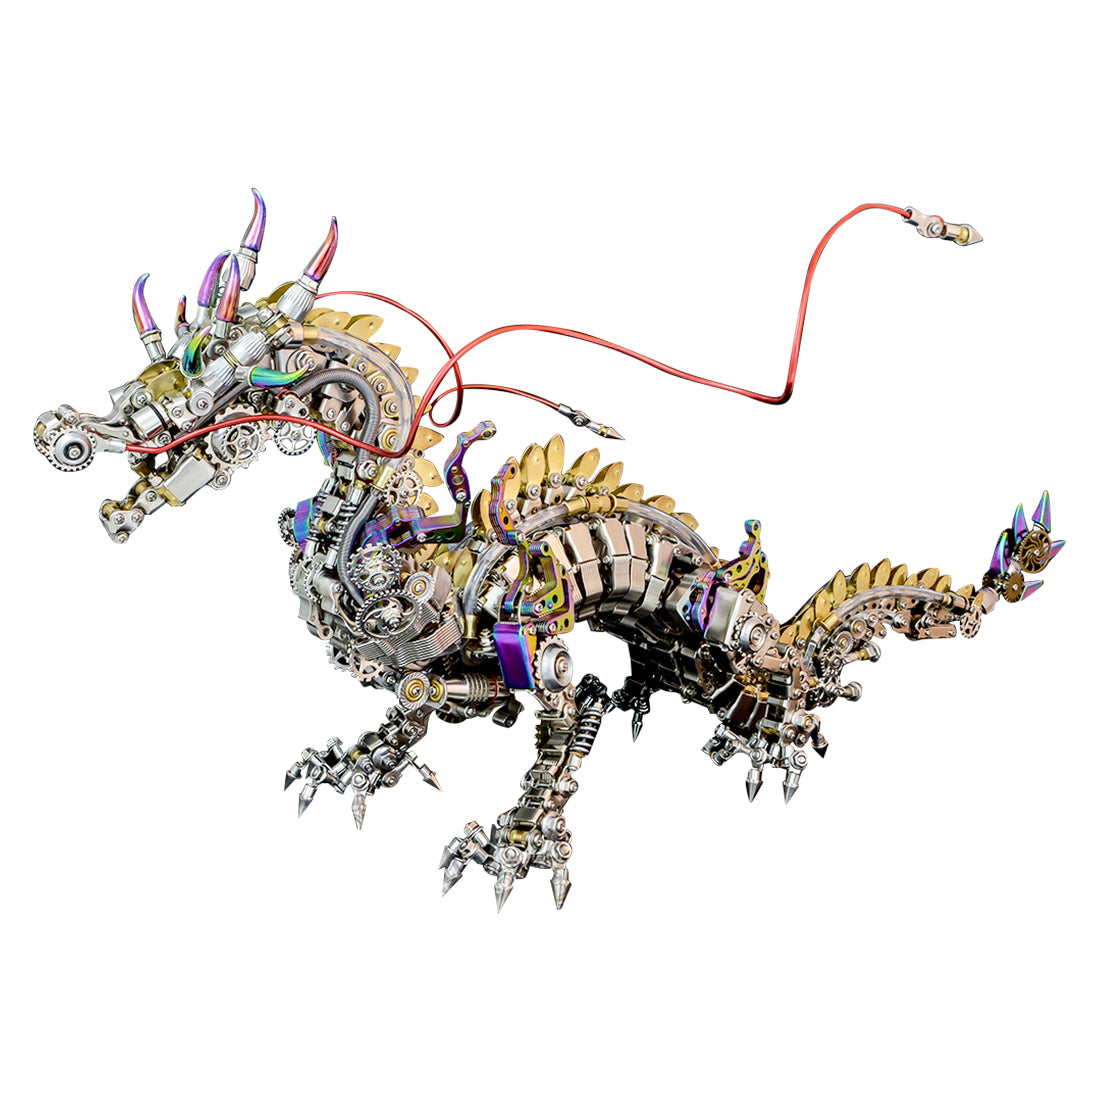 50cm Cyberpunk Mythical Dragon 3D Metal Puzzle Kits